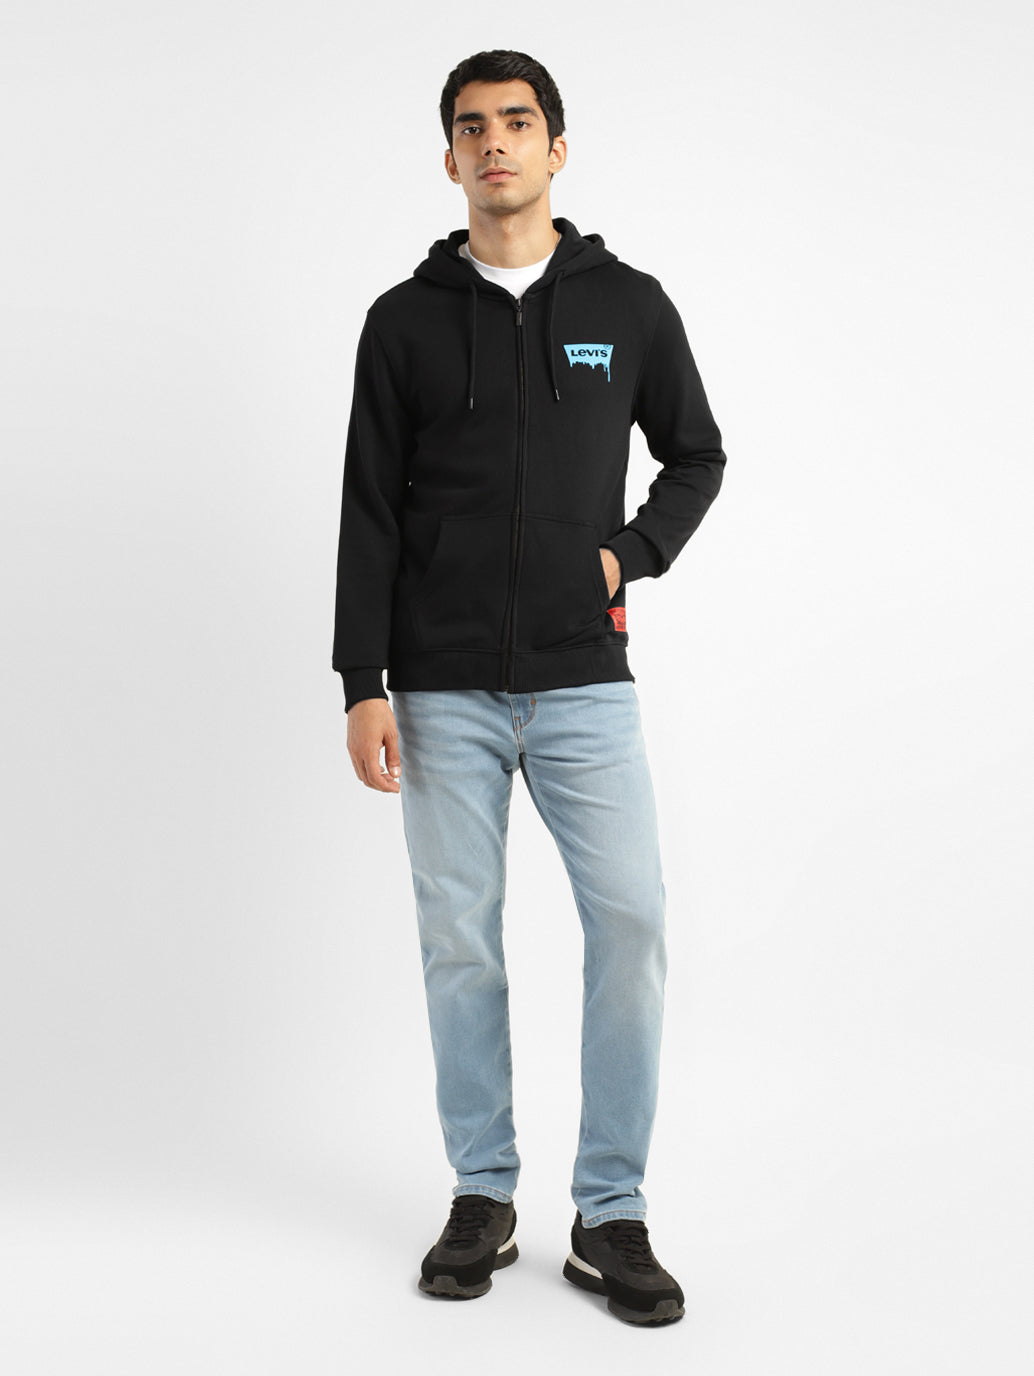 Men's Solid Black Hooded Sweatshirt